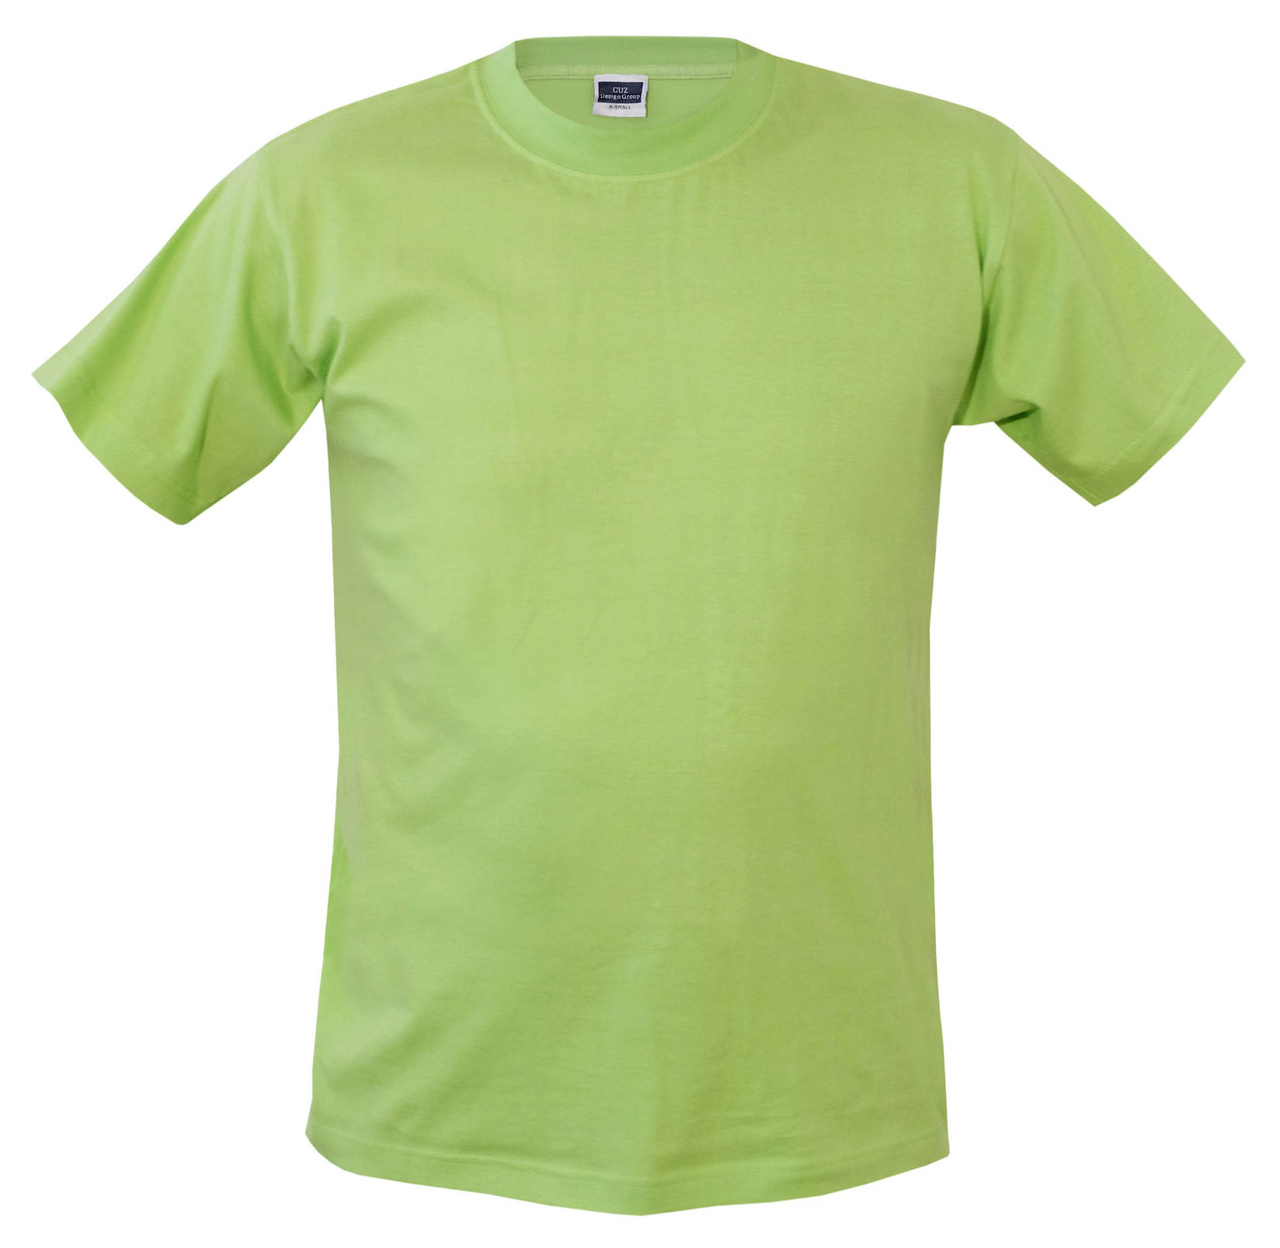 T-shirt, unisex - Lime